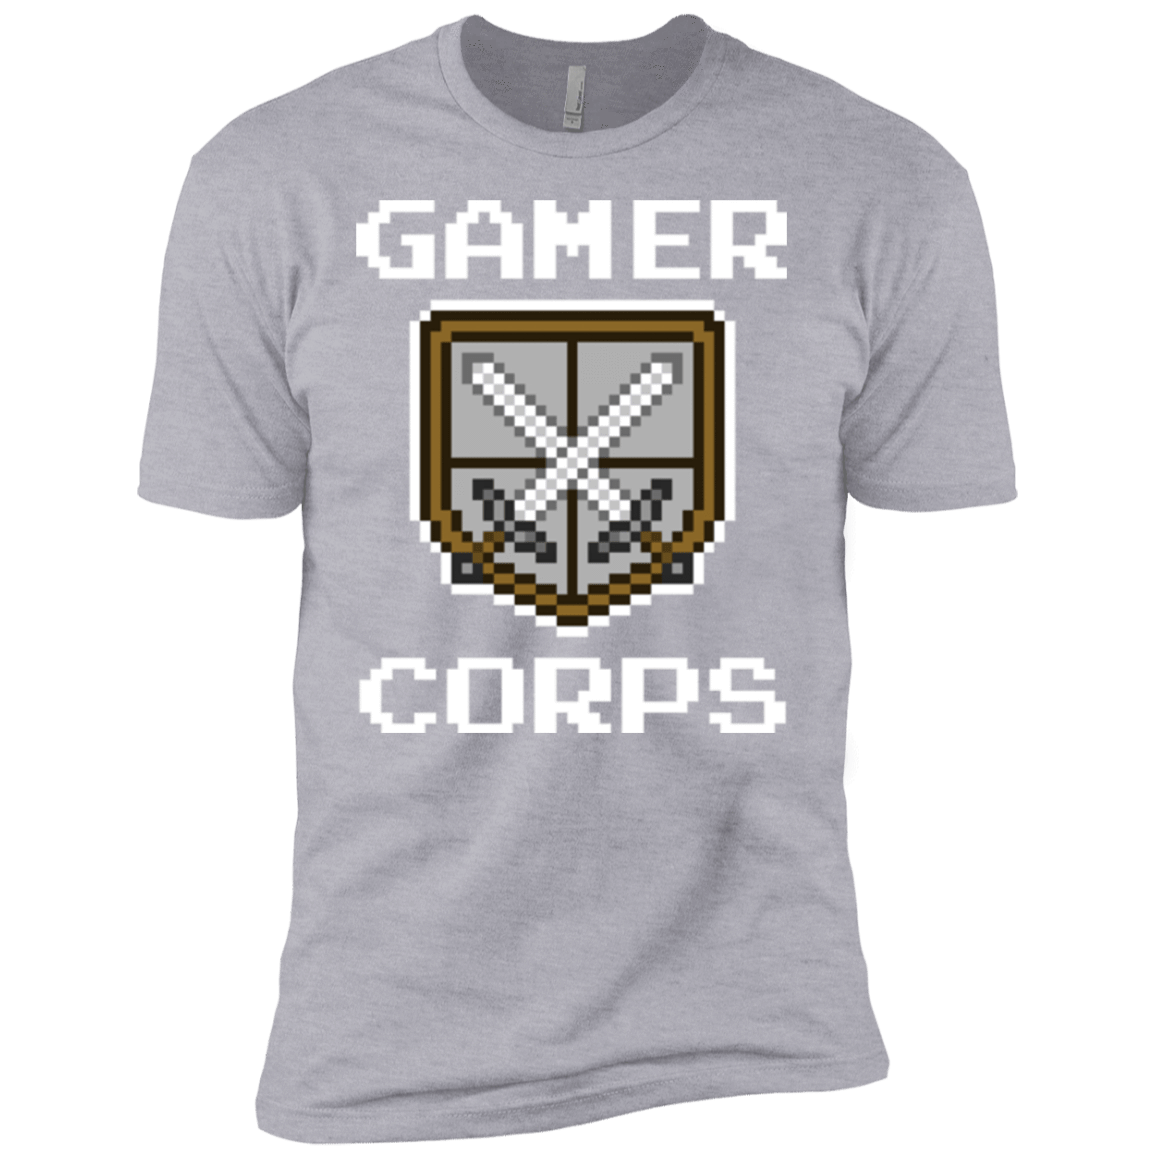 T-Shirts Heather Grey / YXS Gamer corps Boys Premium T-Shirt